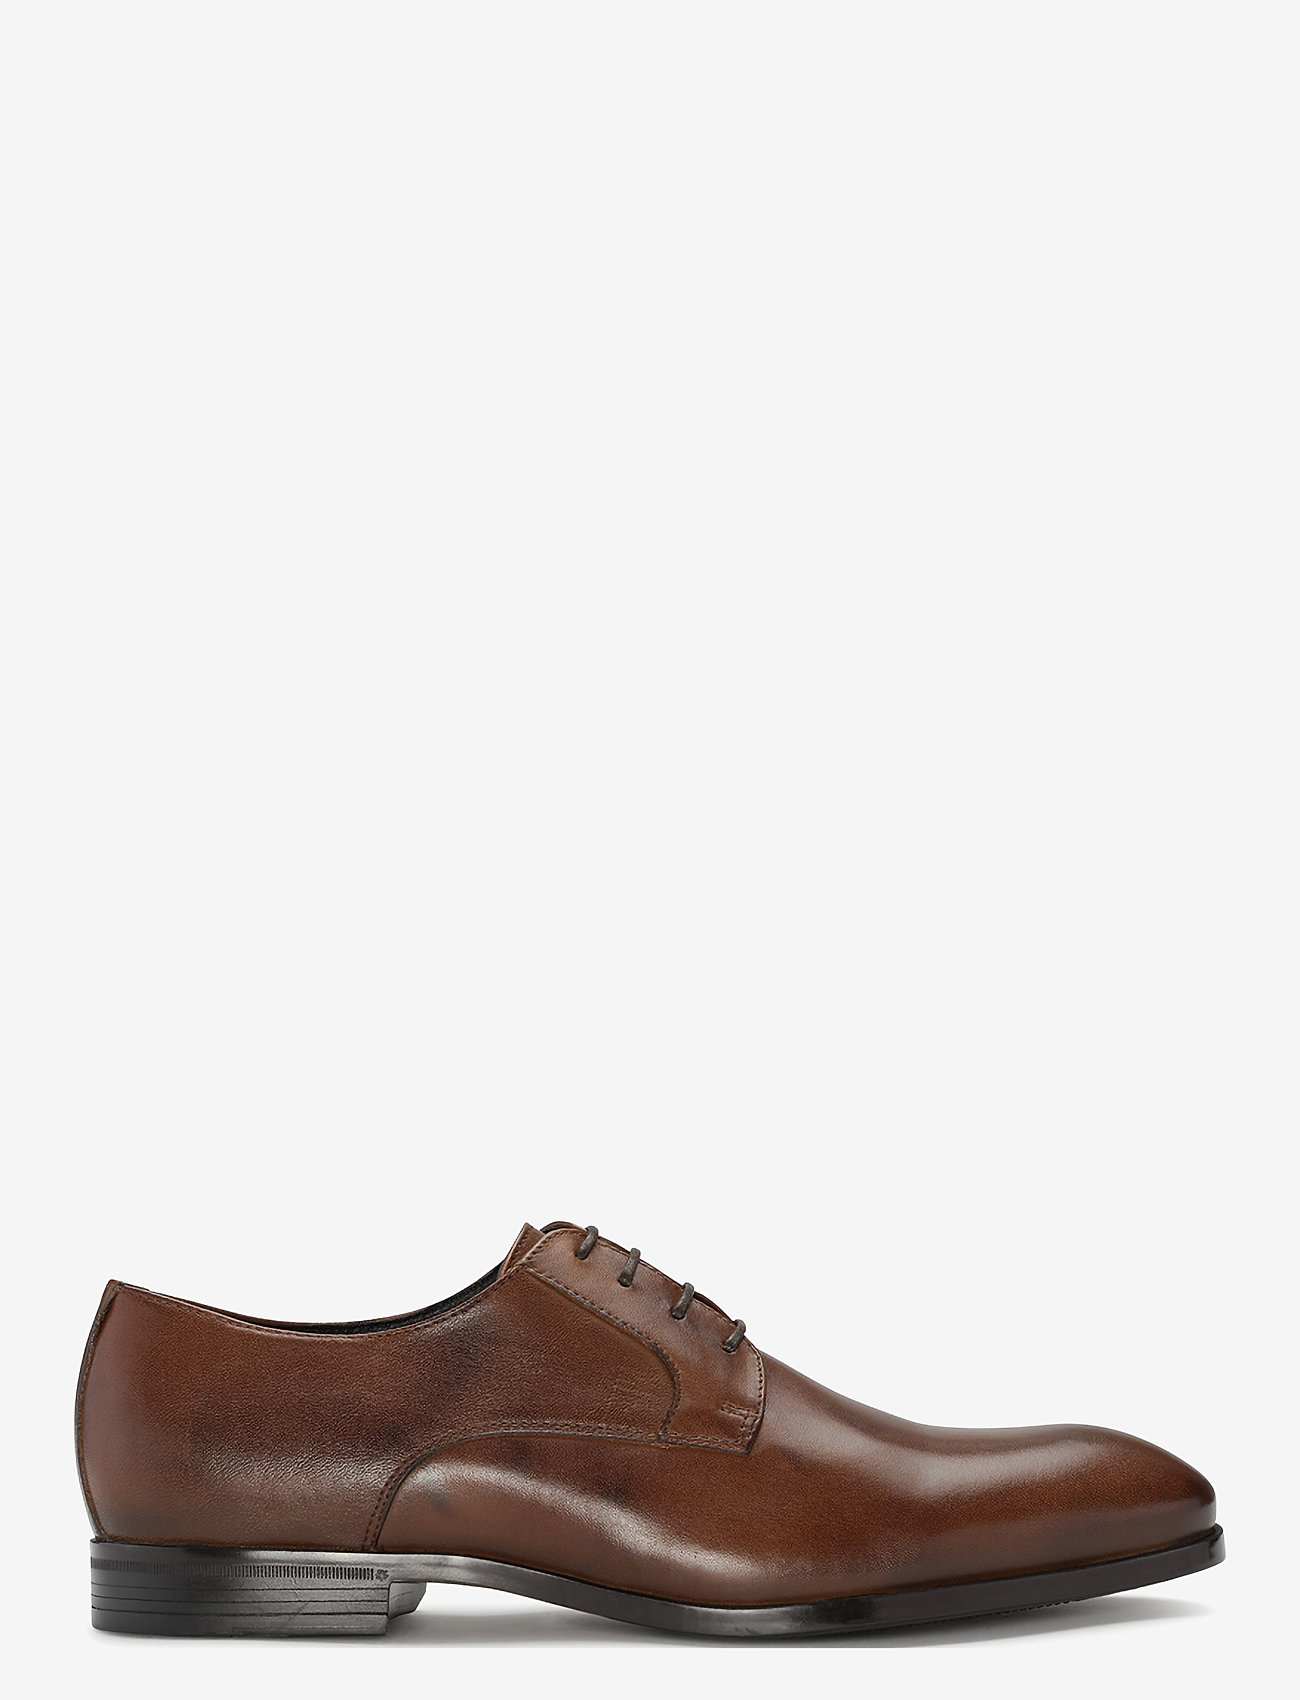 Playboy Footwear - PB10048 - oxford sko - cognac leather - 1